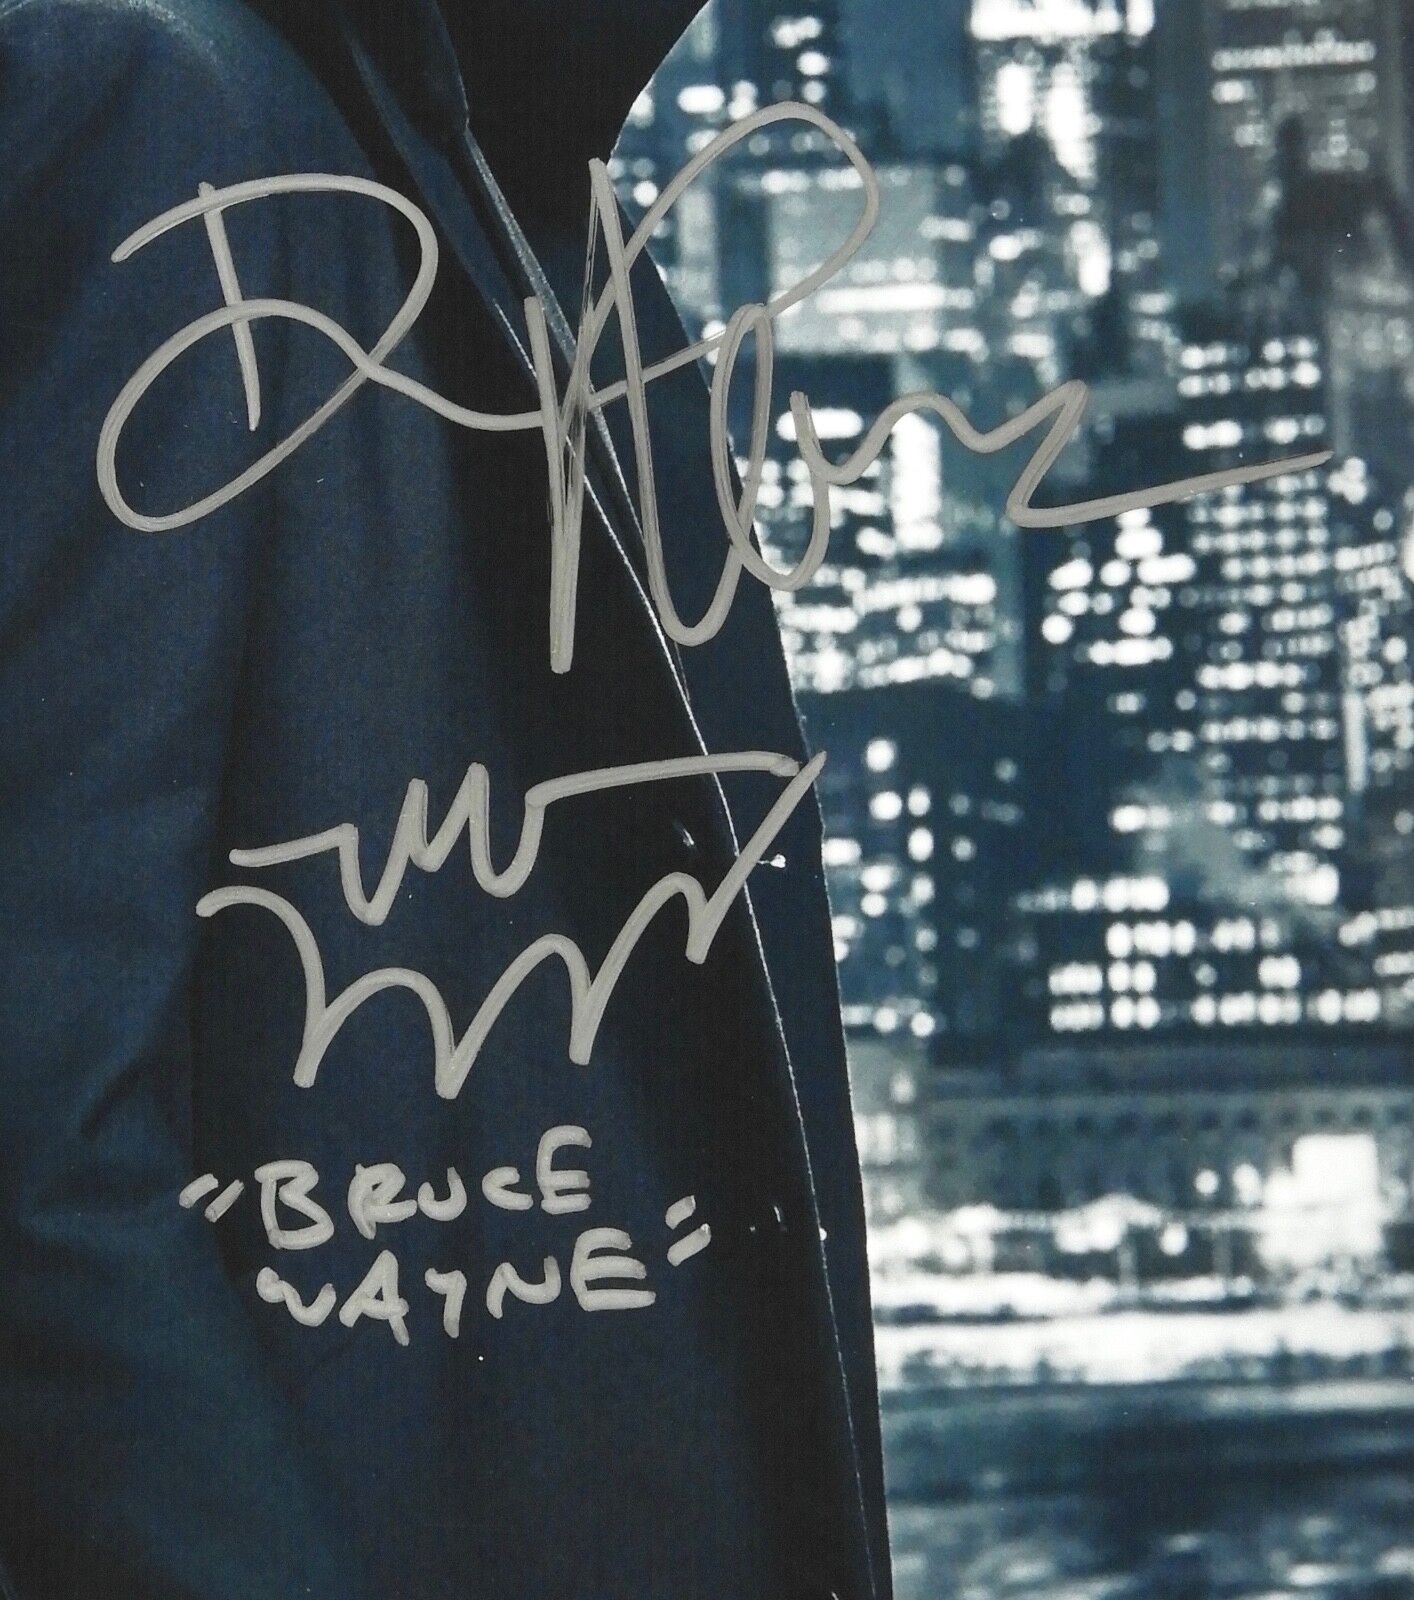 David Mazouz Bruce Wayne Batman Gotham JSA Autograph Signed Photo 11 x 14